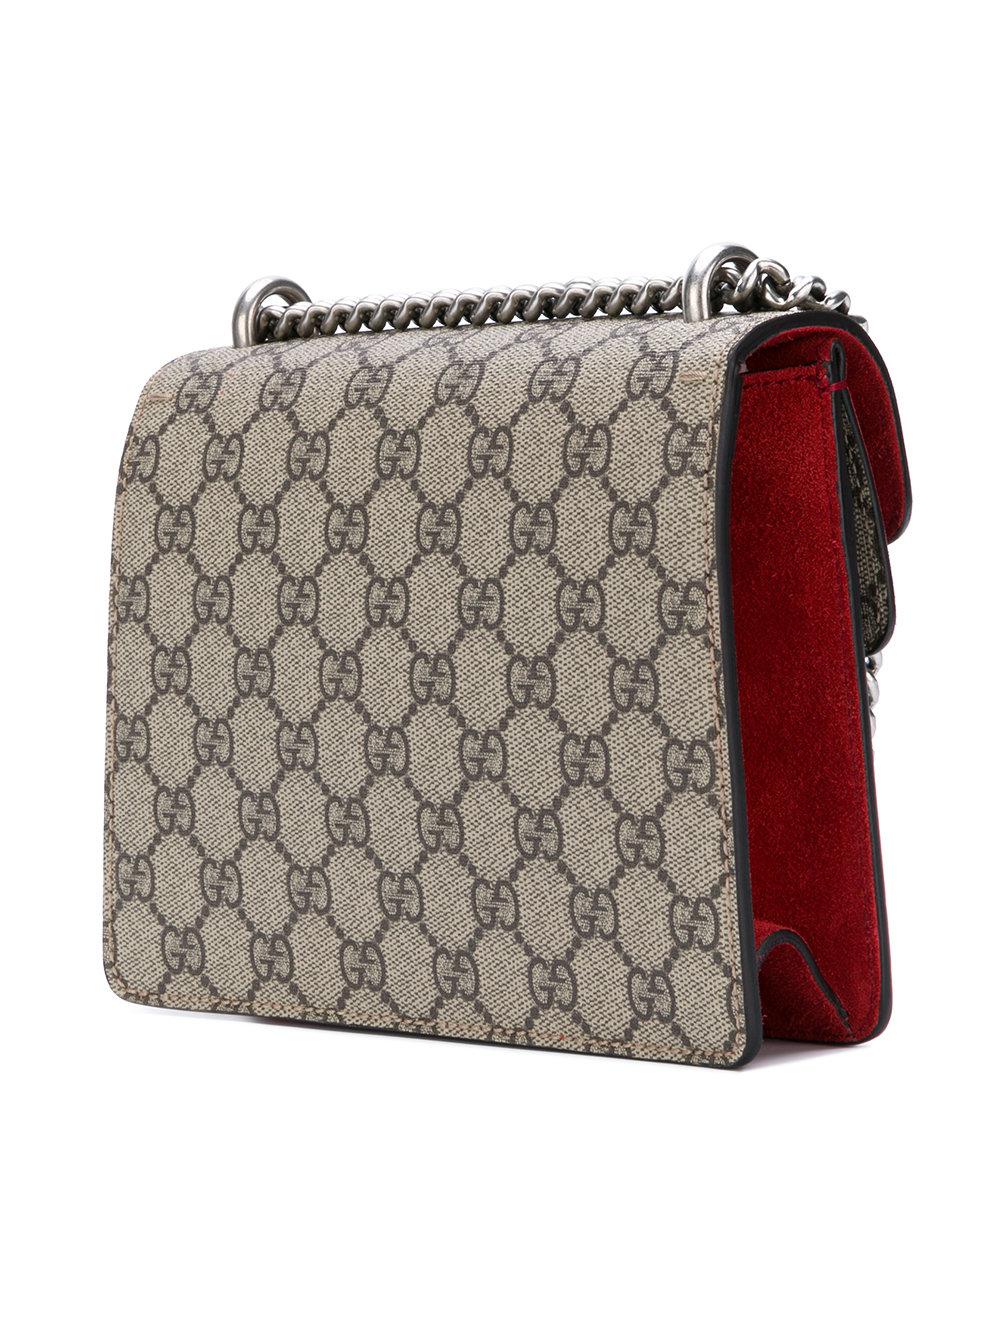 Gucci Leather Dionysus Gg Supreme Mini Bag - Lyst